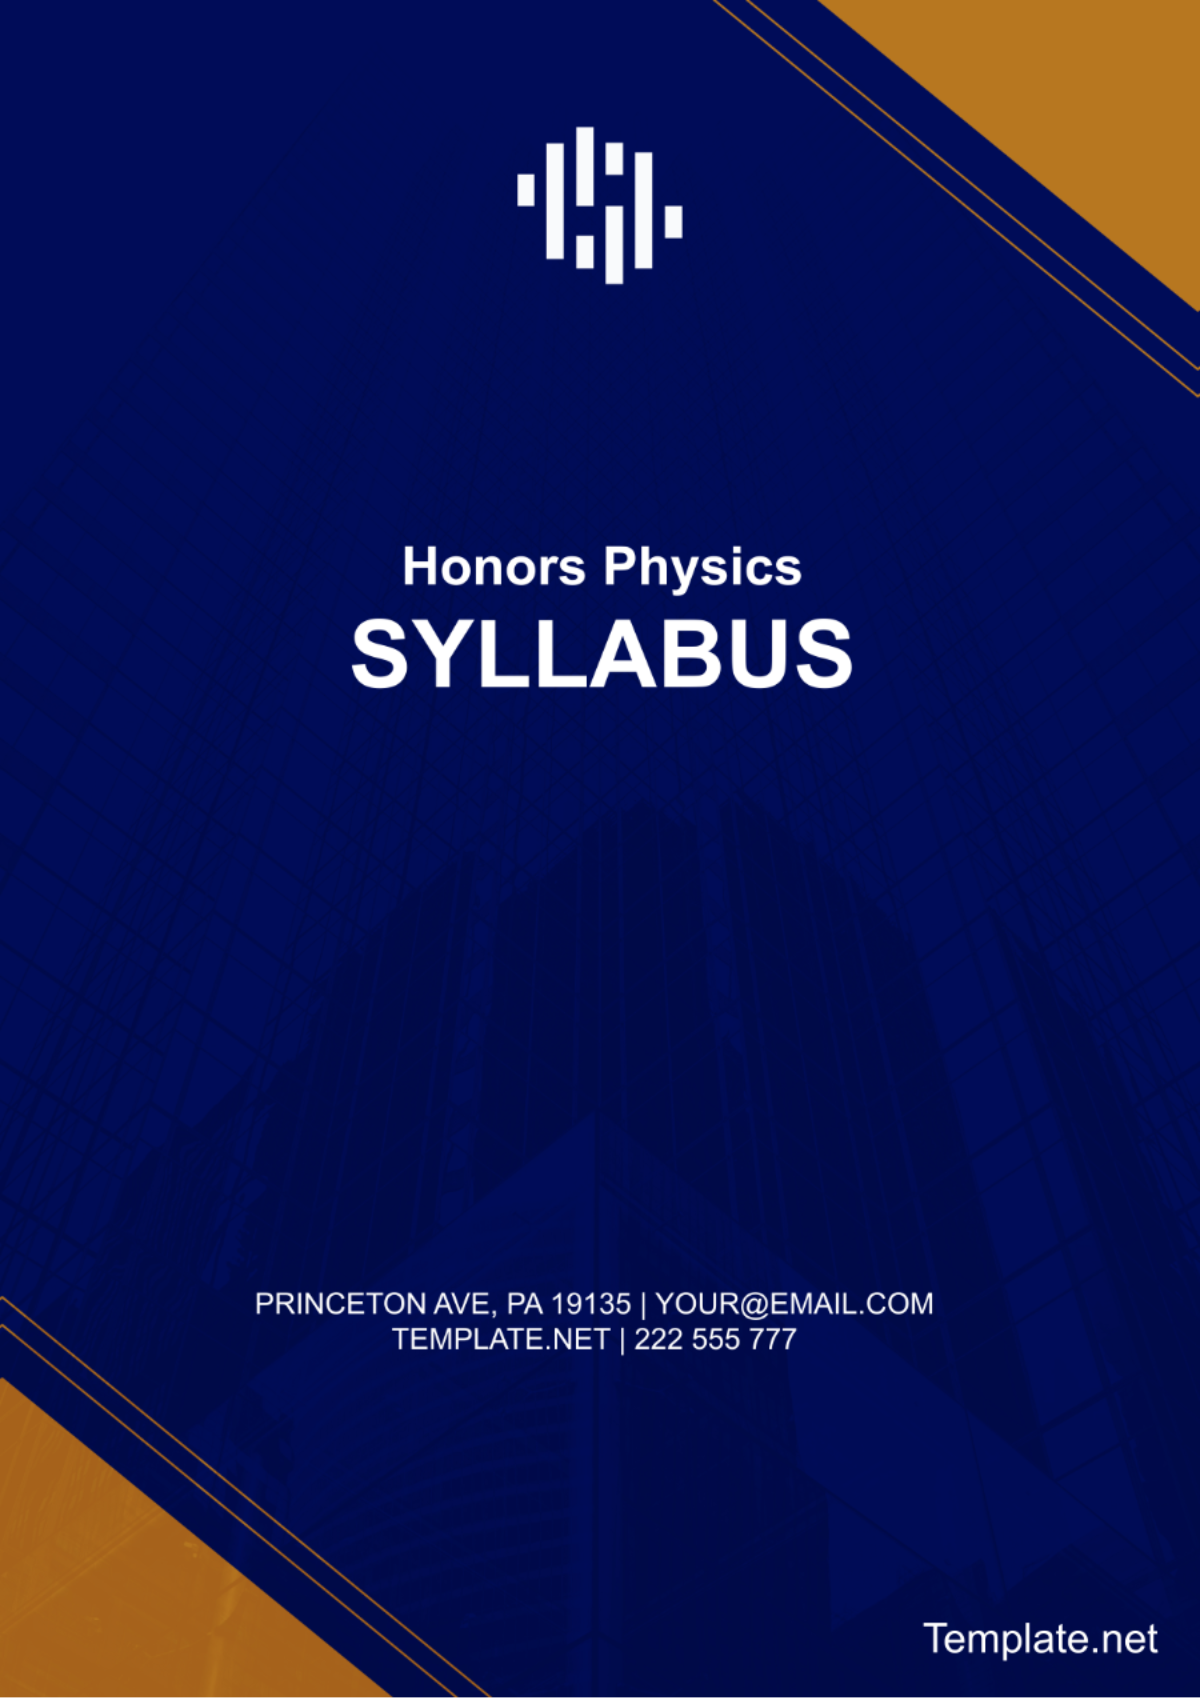 Honors Physics Syllabus Template